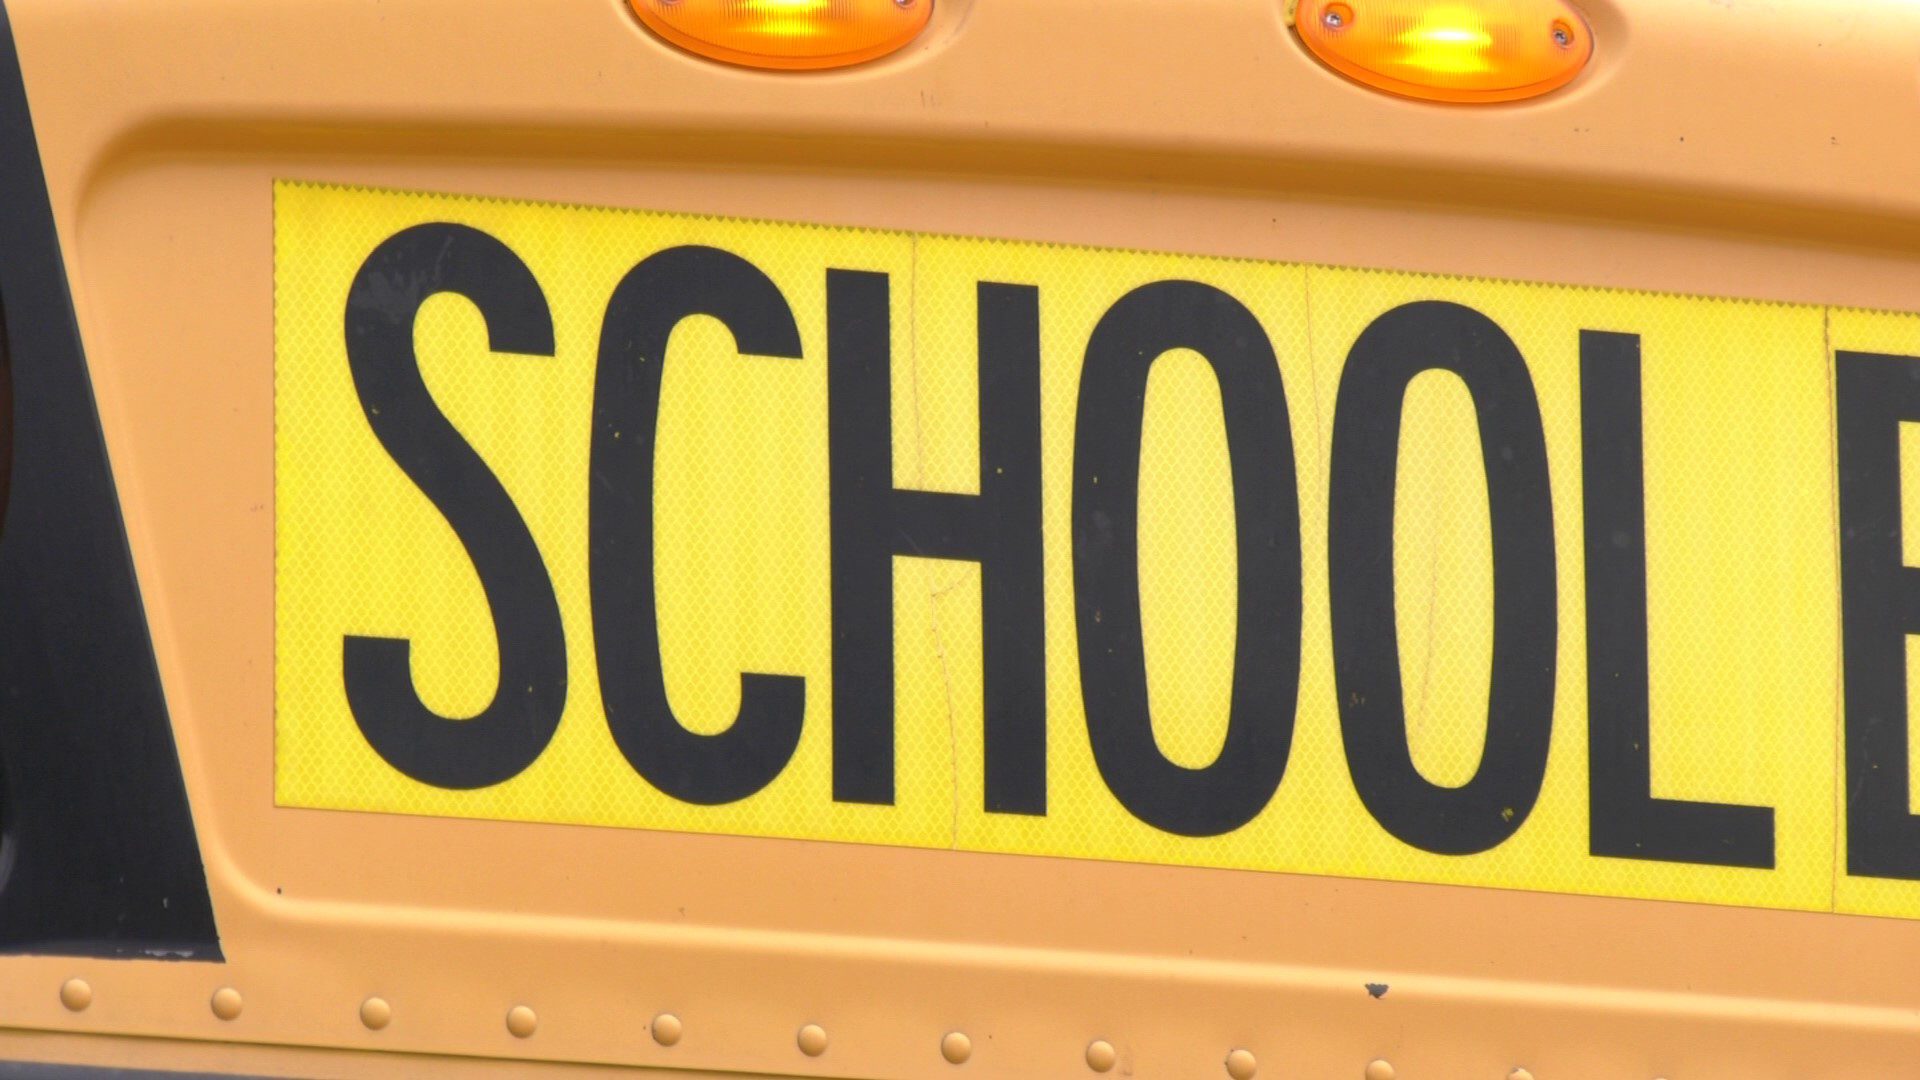 A "School Bus" sign on a bus